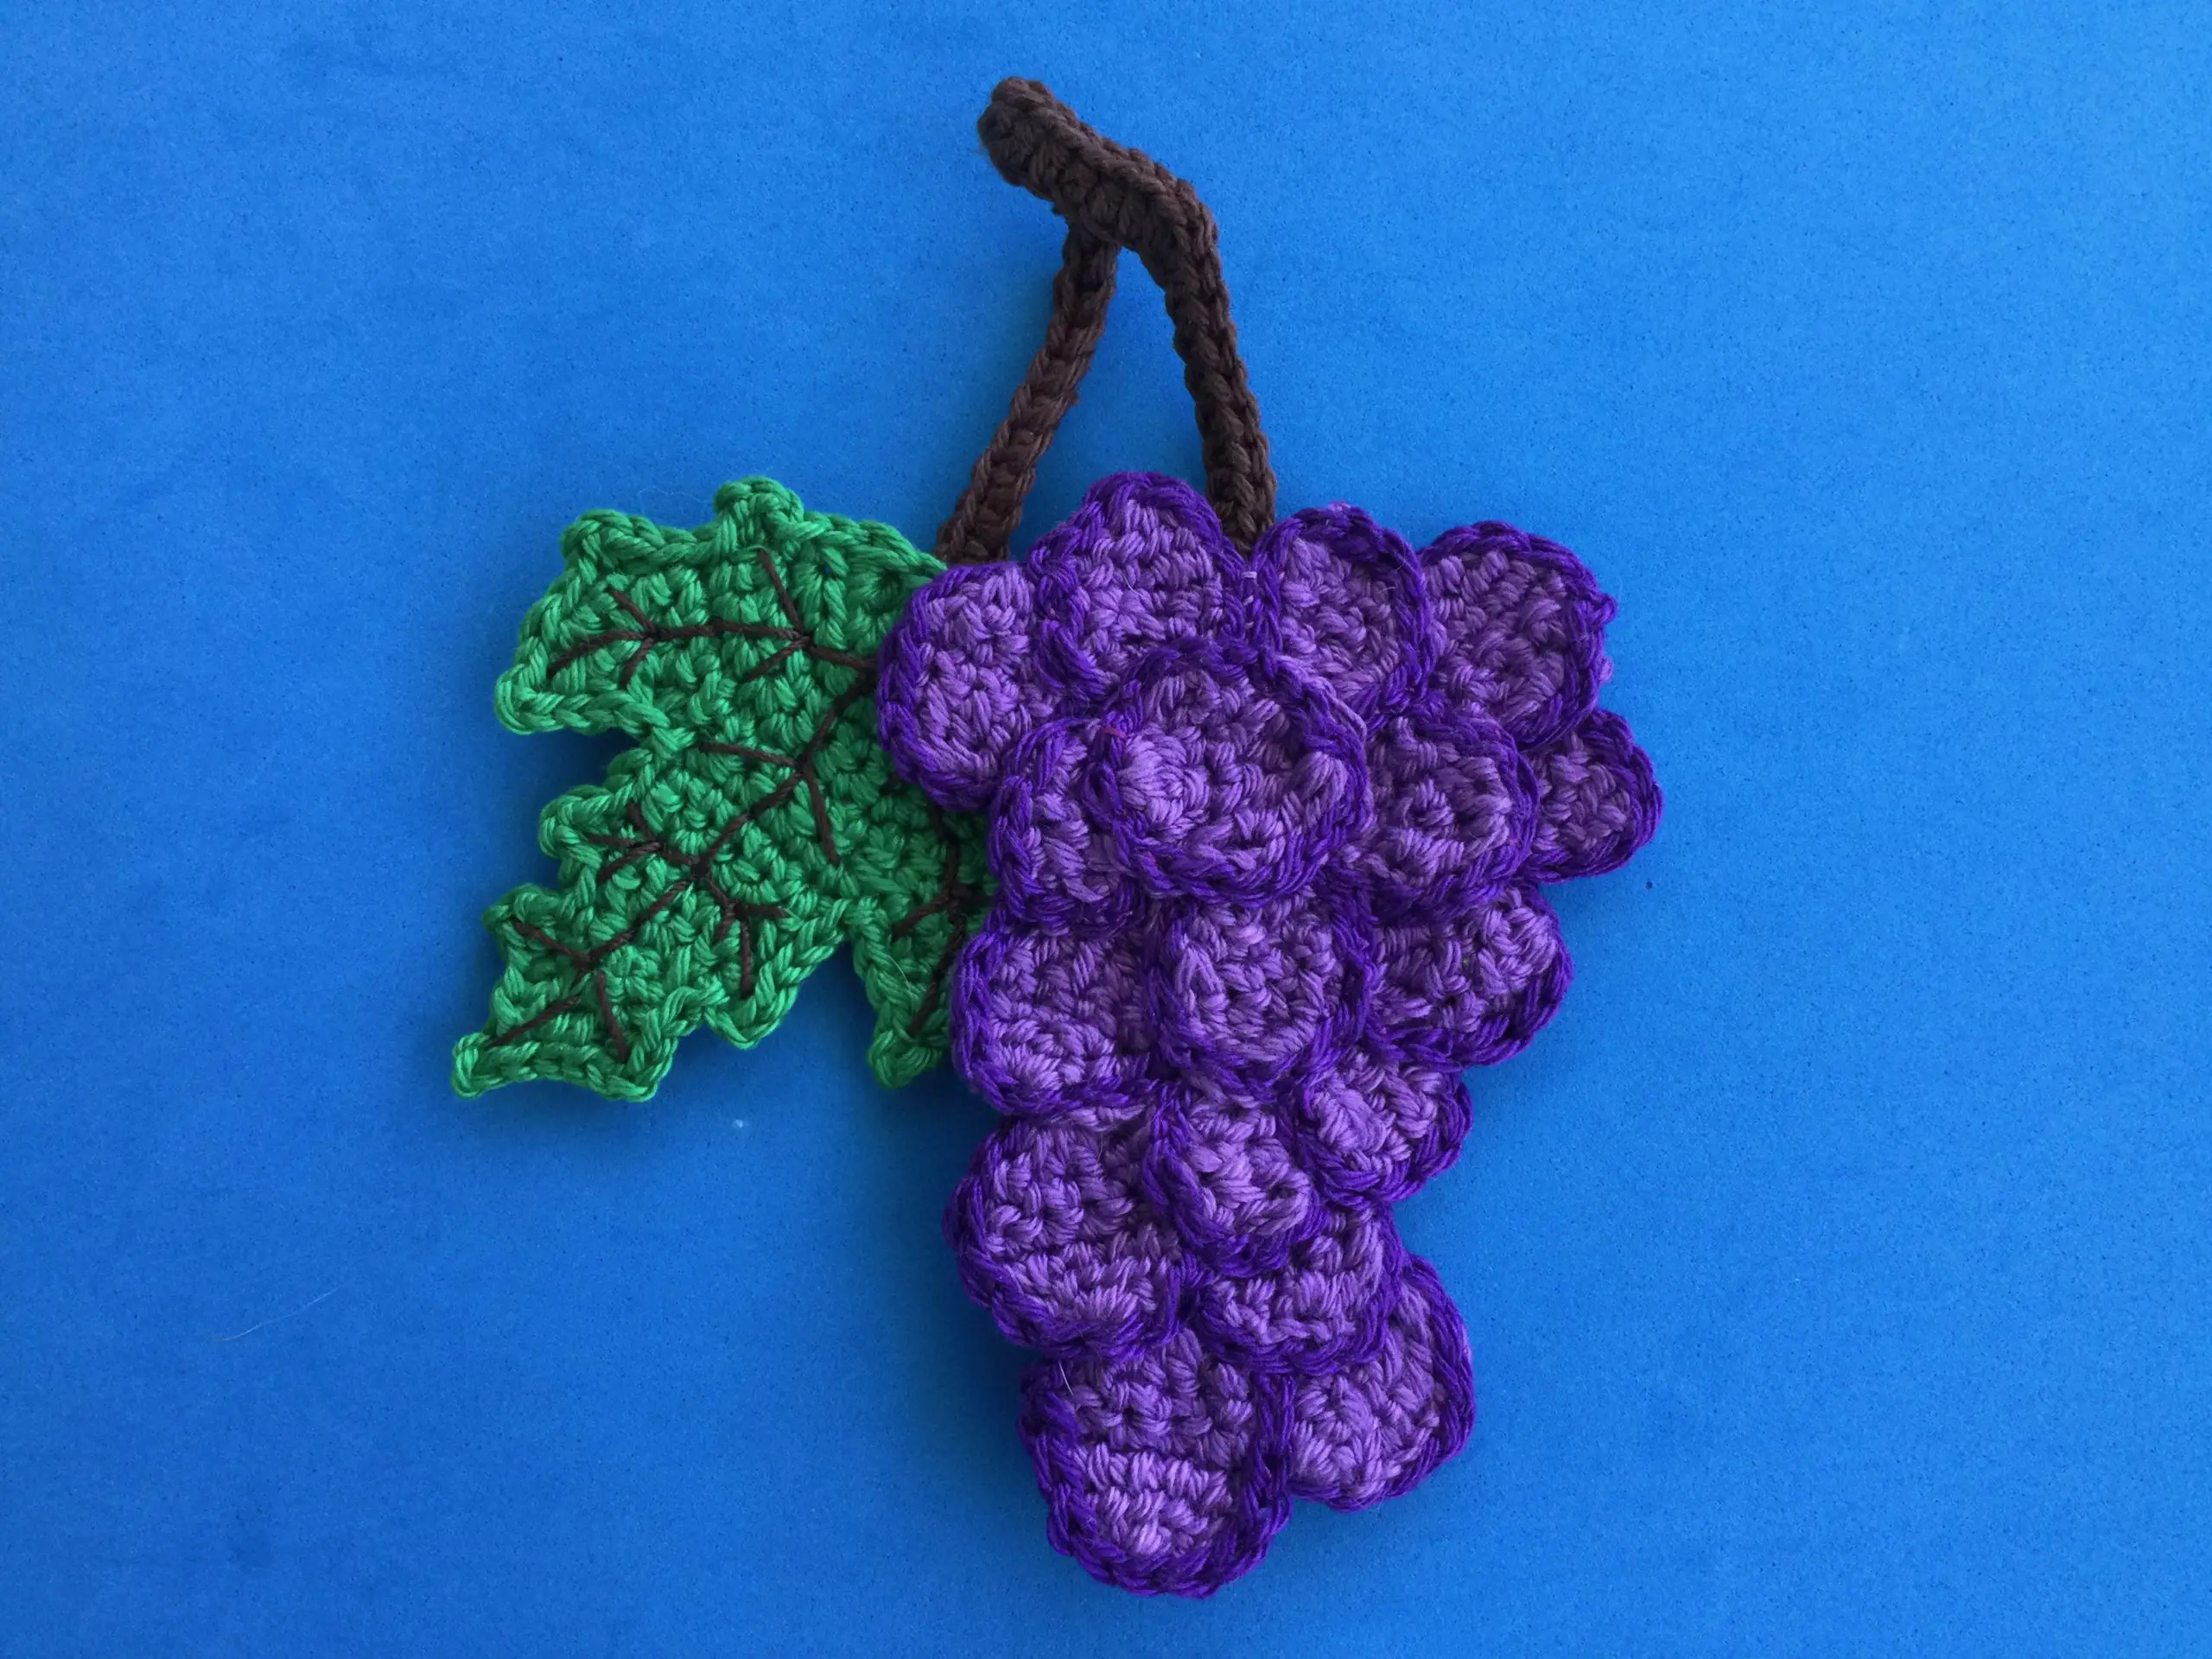 Finished crochet grapes 4 ply landscape